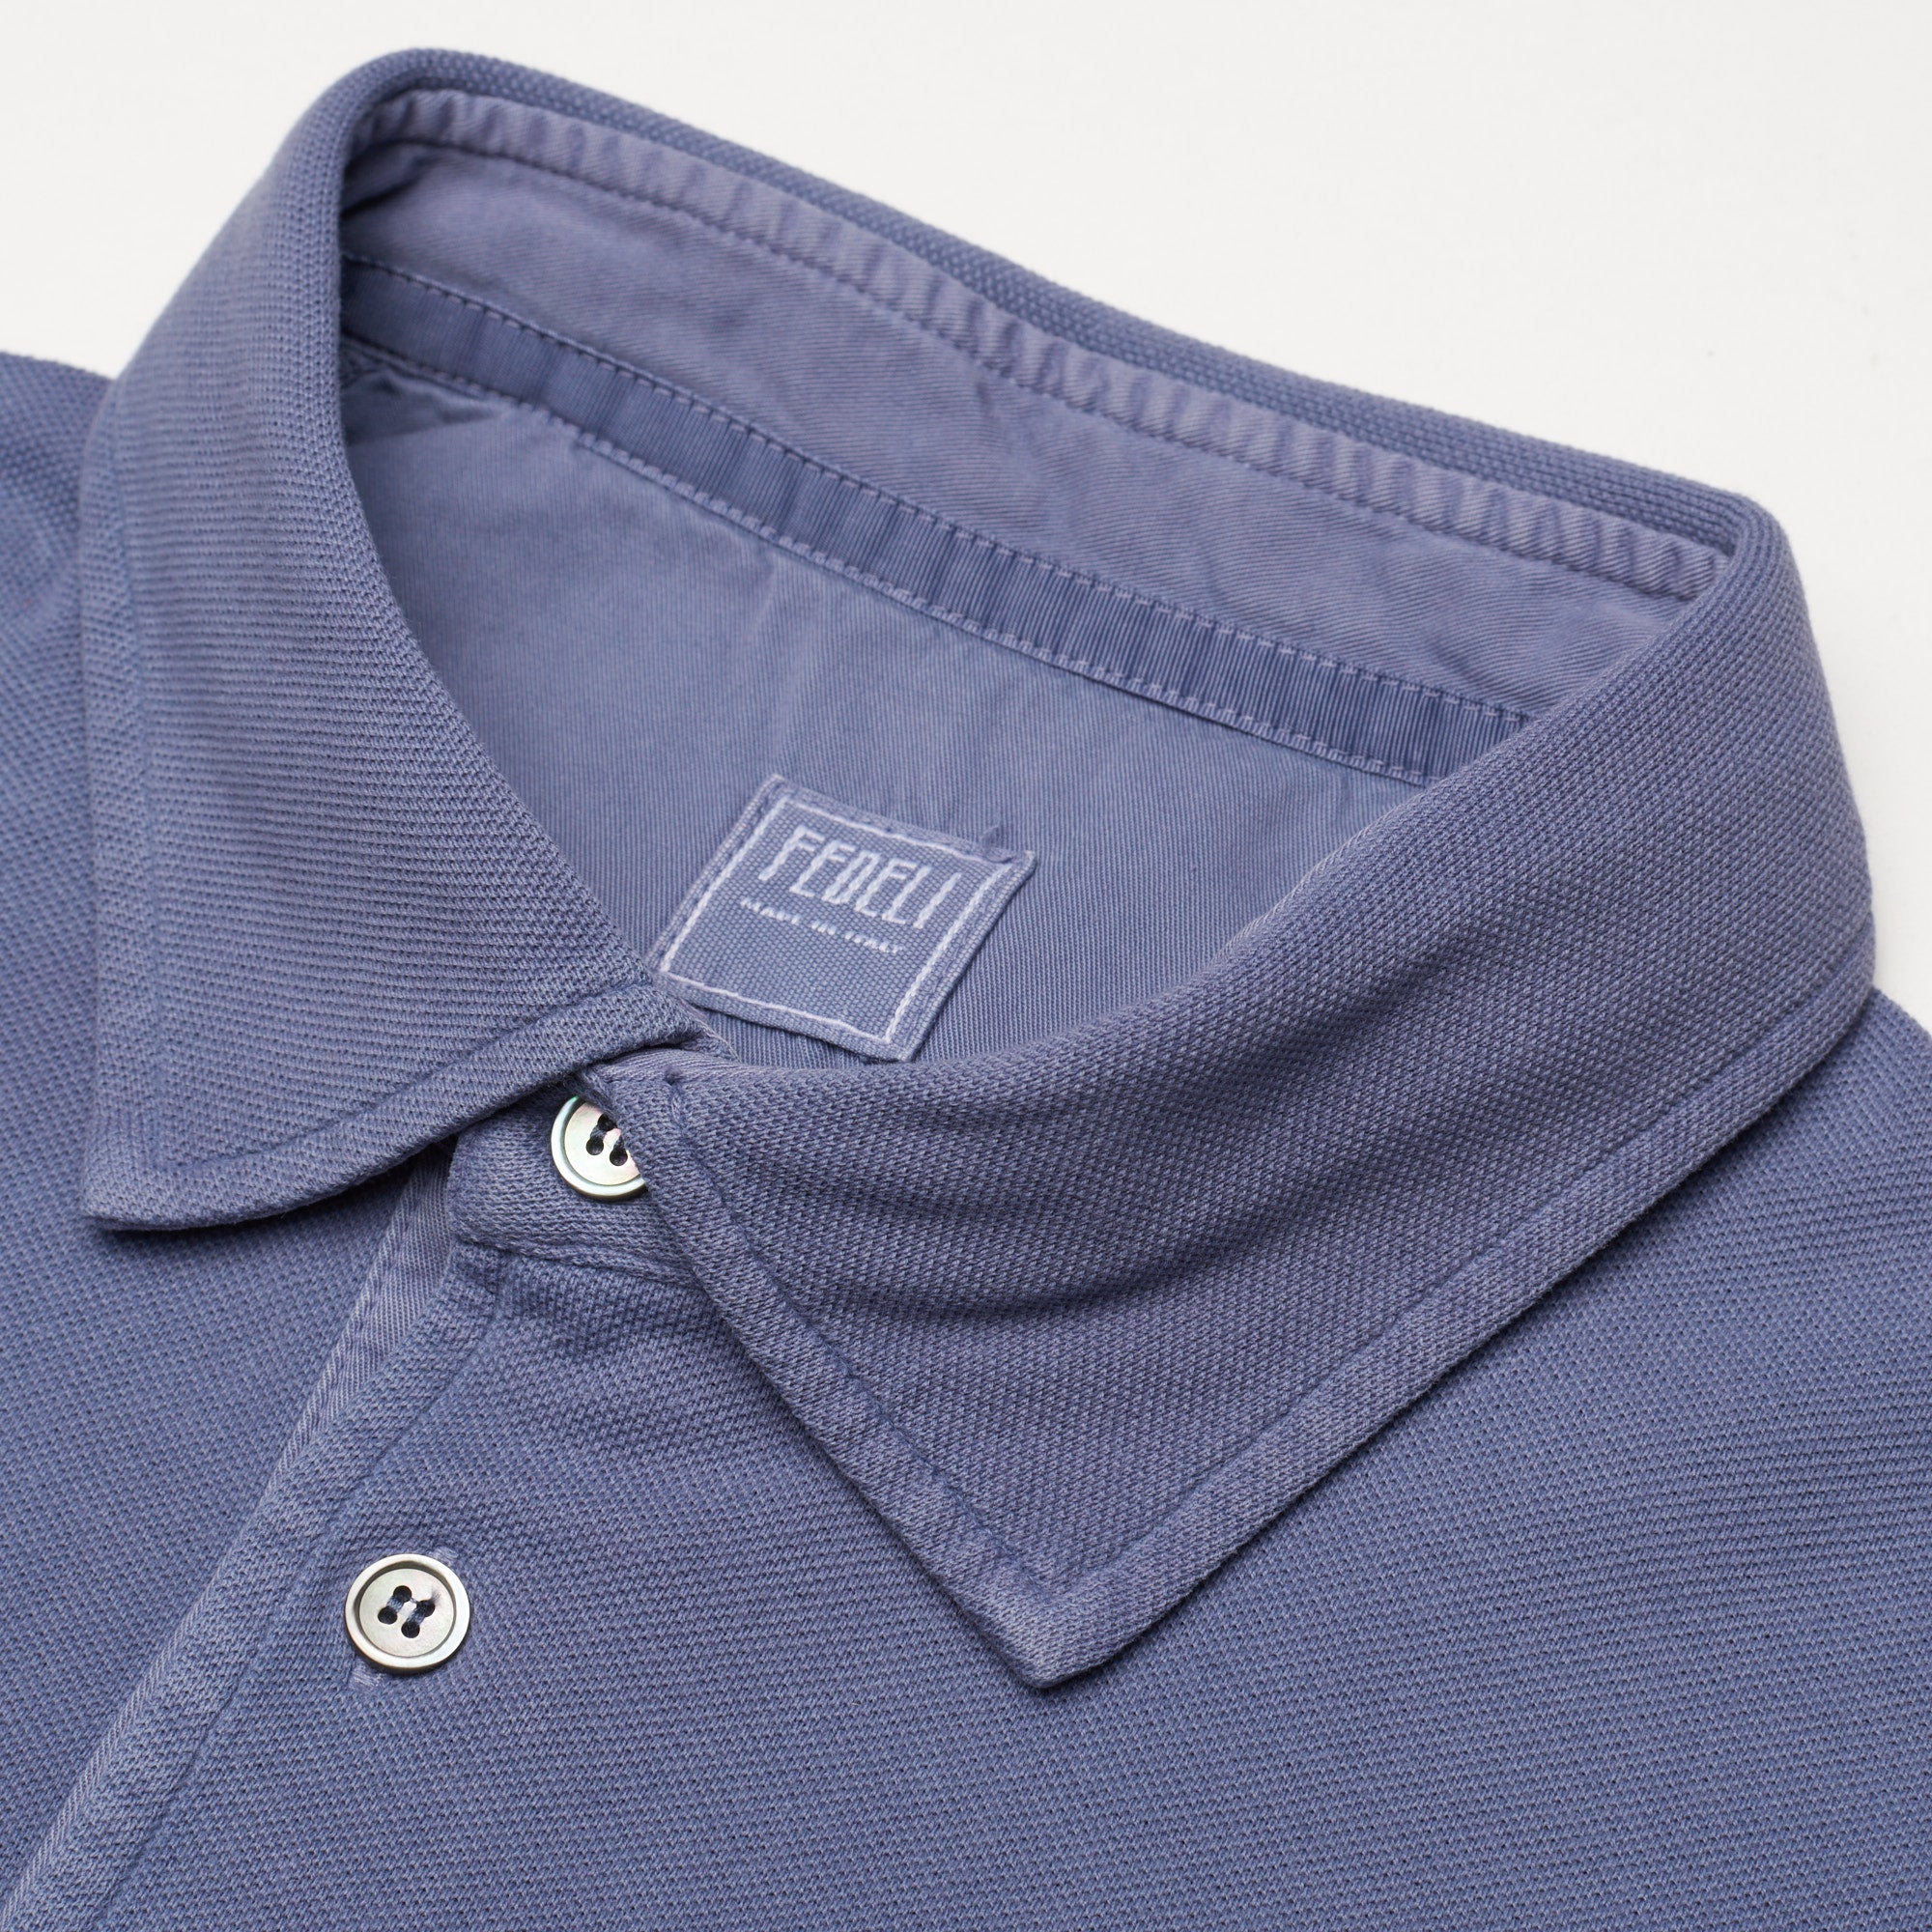 FEDELI "North" Steel Blue Cotton Pique Long Sleeve Polo Shirt NEW XXL FEDELI